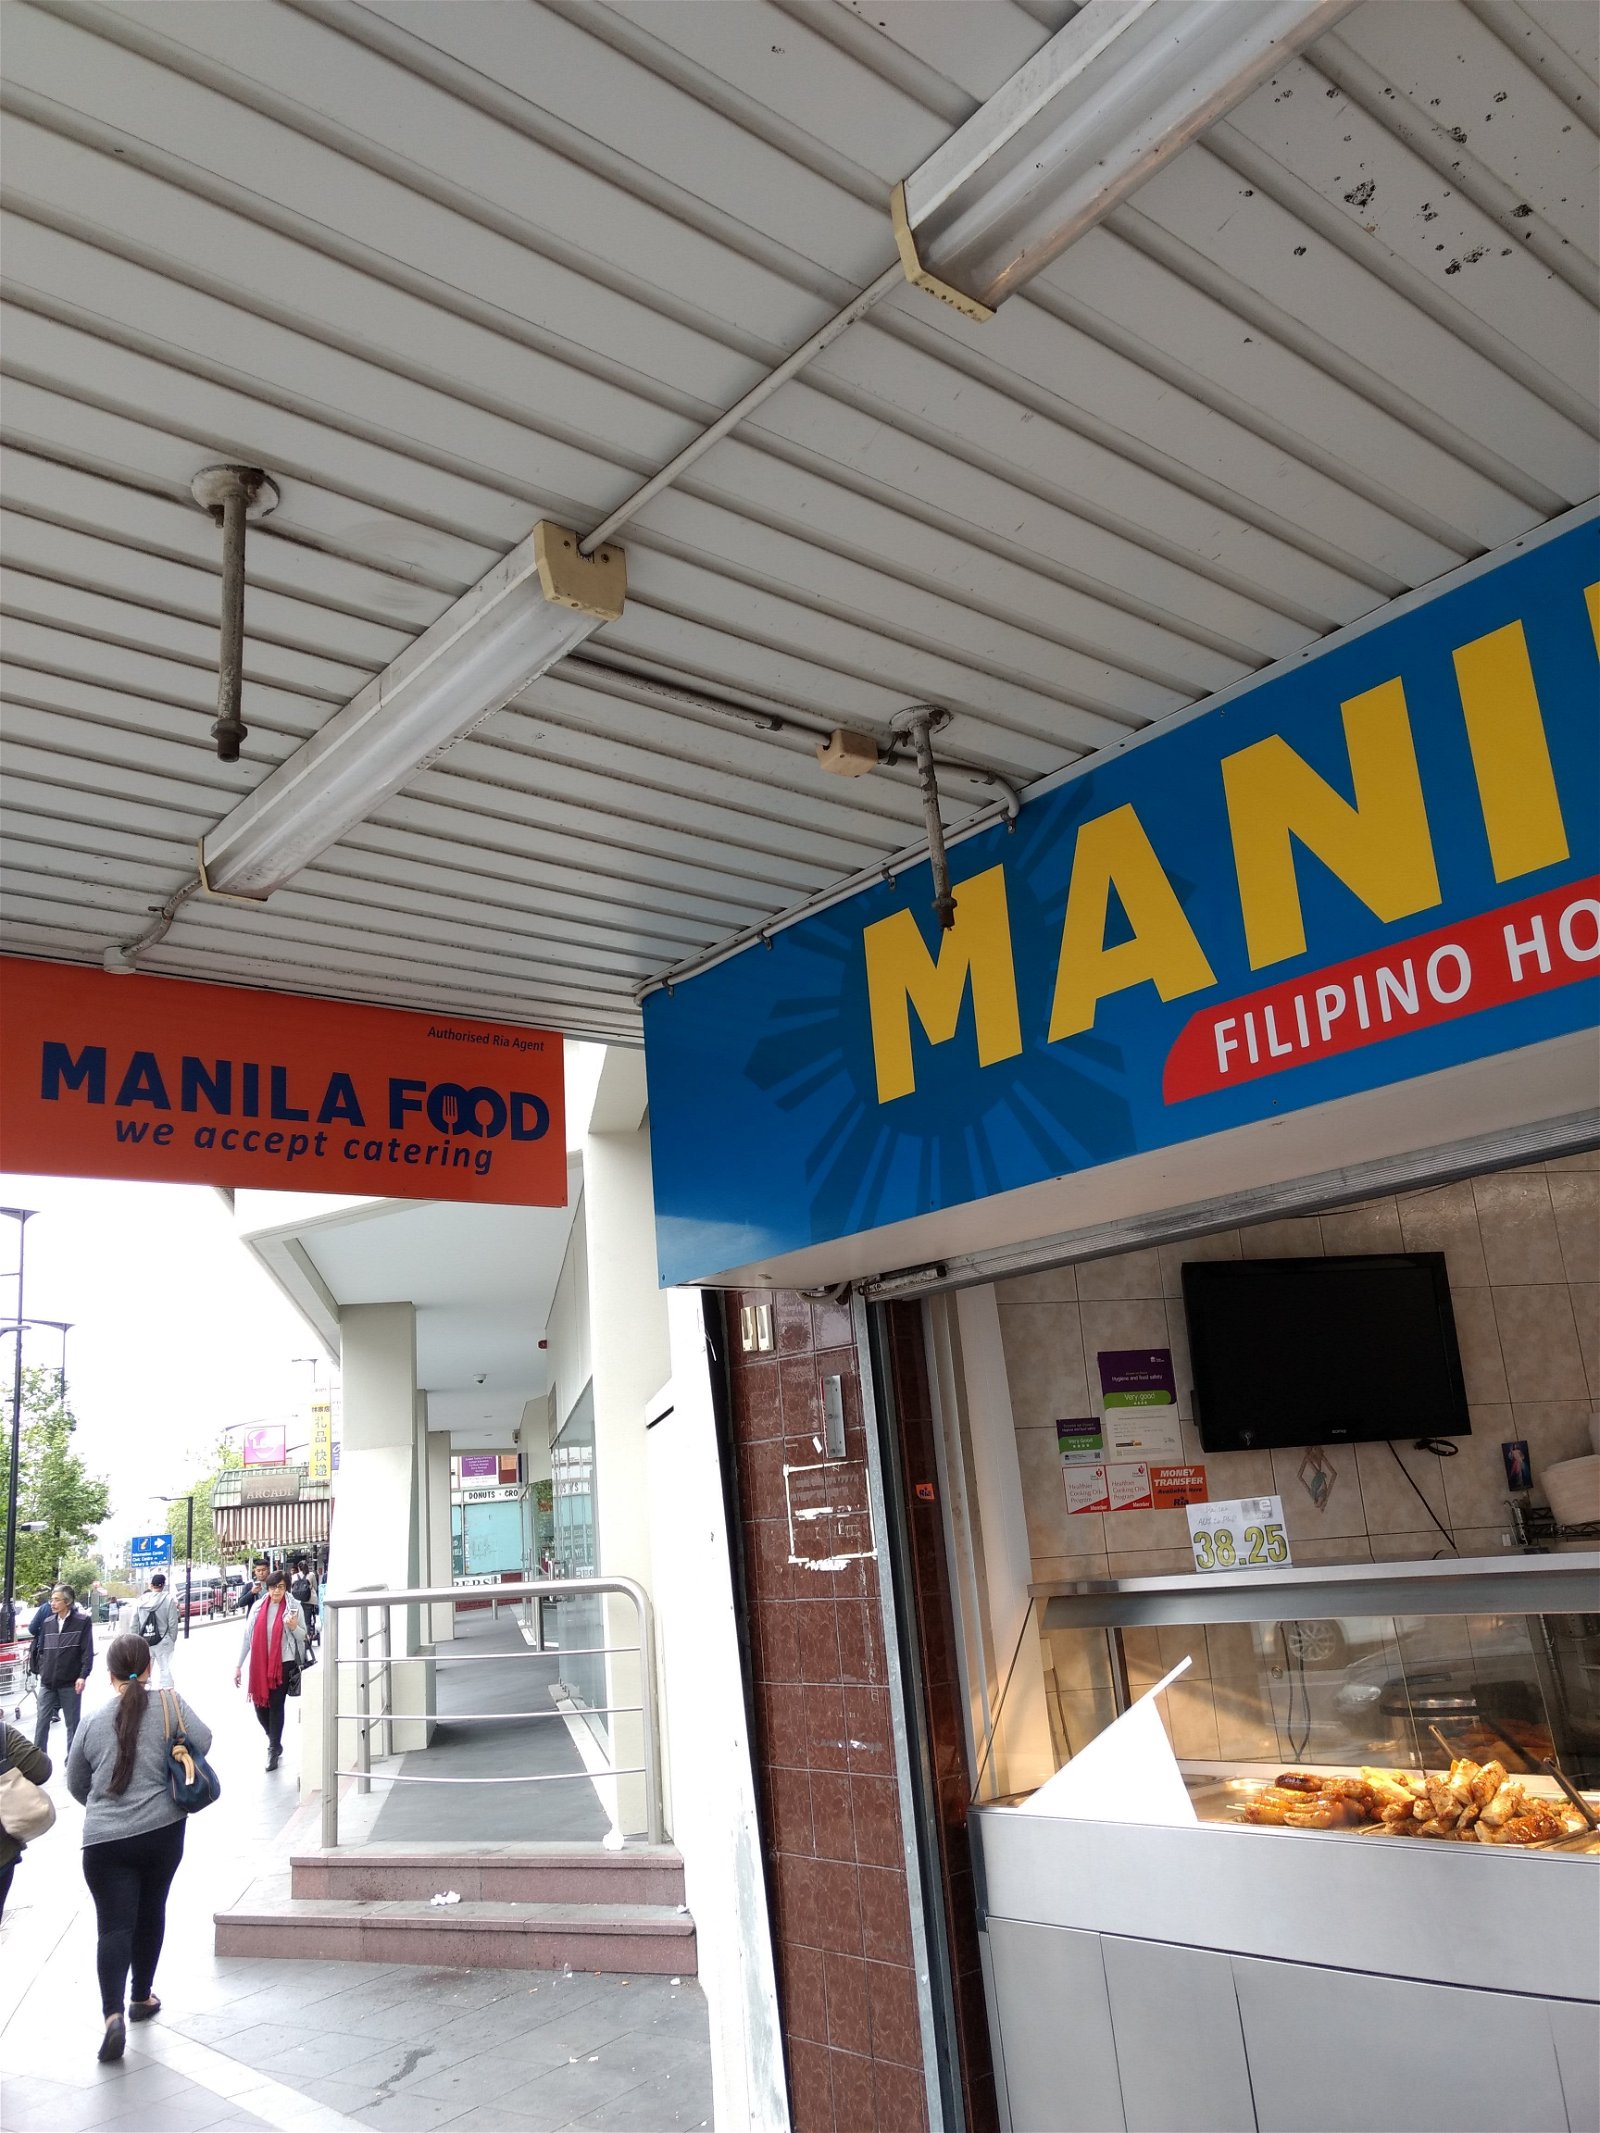 Manila Food - Accommodation Find 0